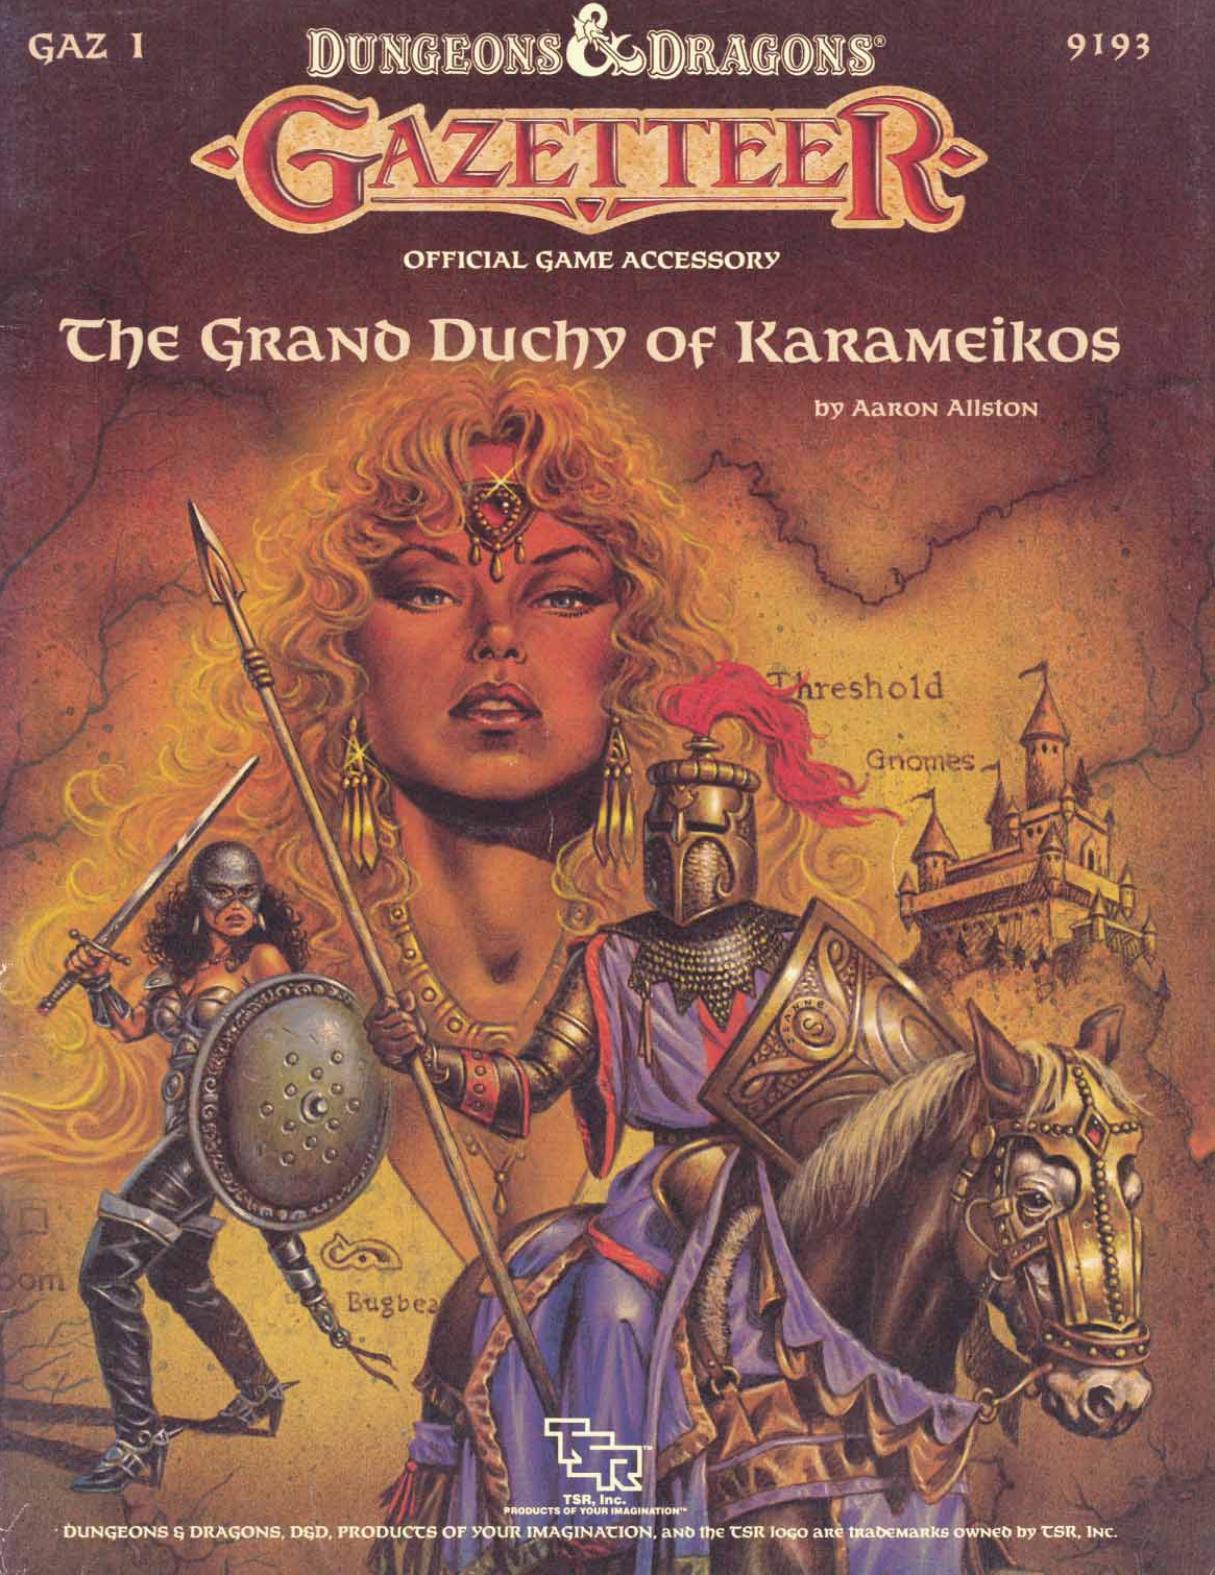 The Grand Duchy of Karameikos